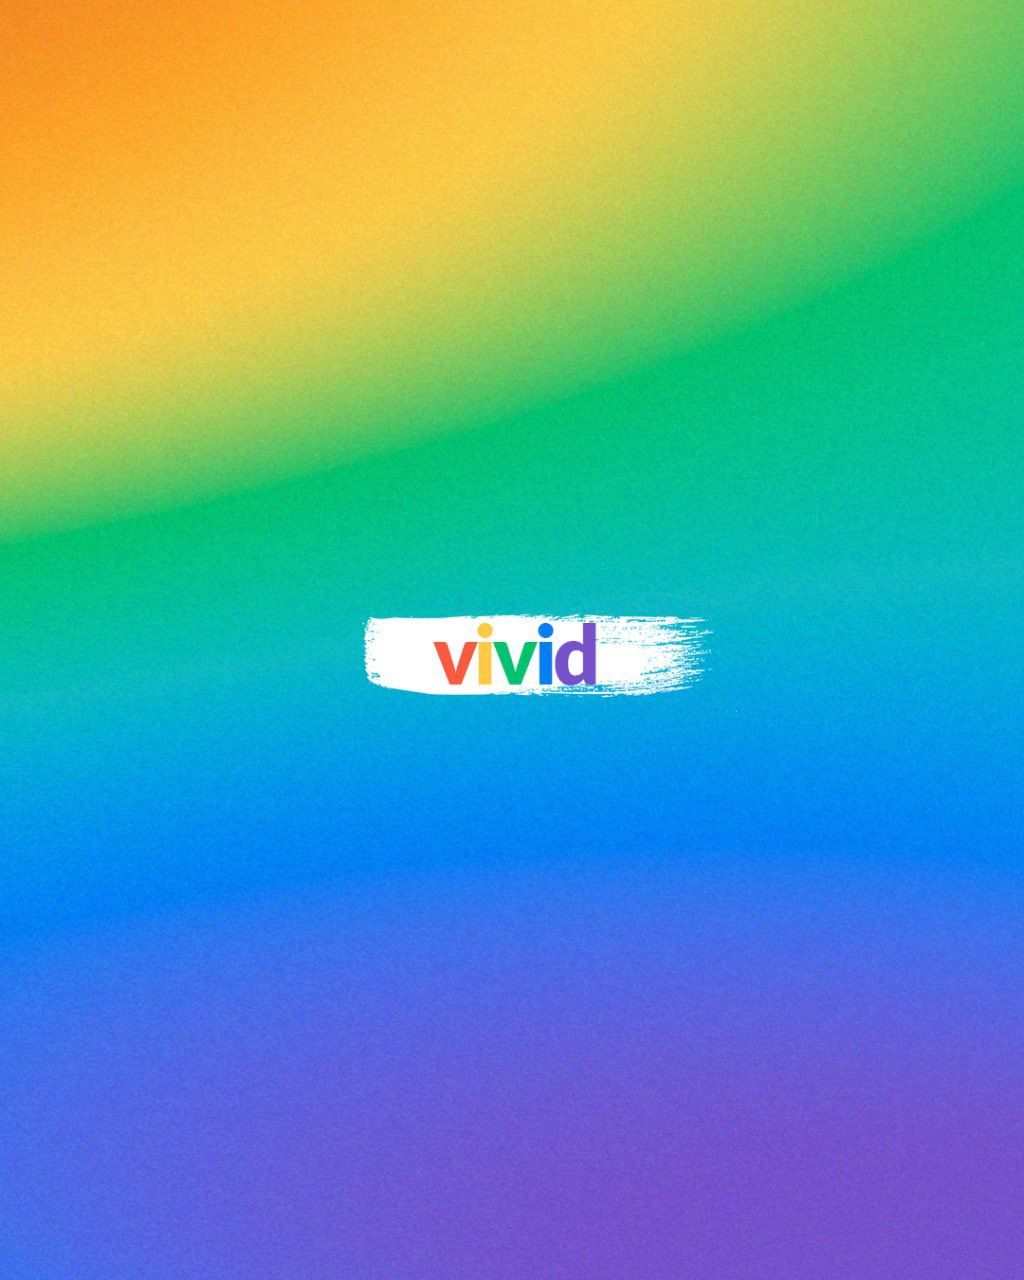 Vivid logo on a rainbow background - Pride